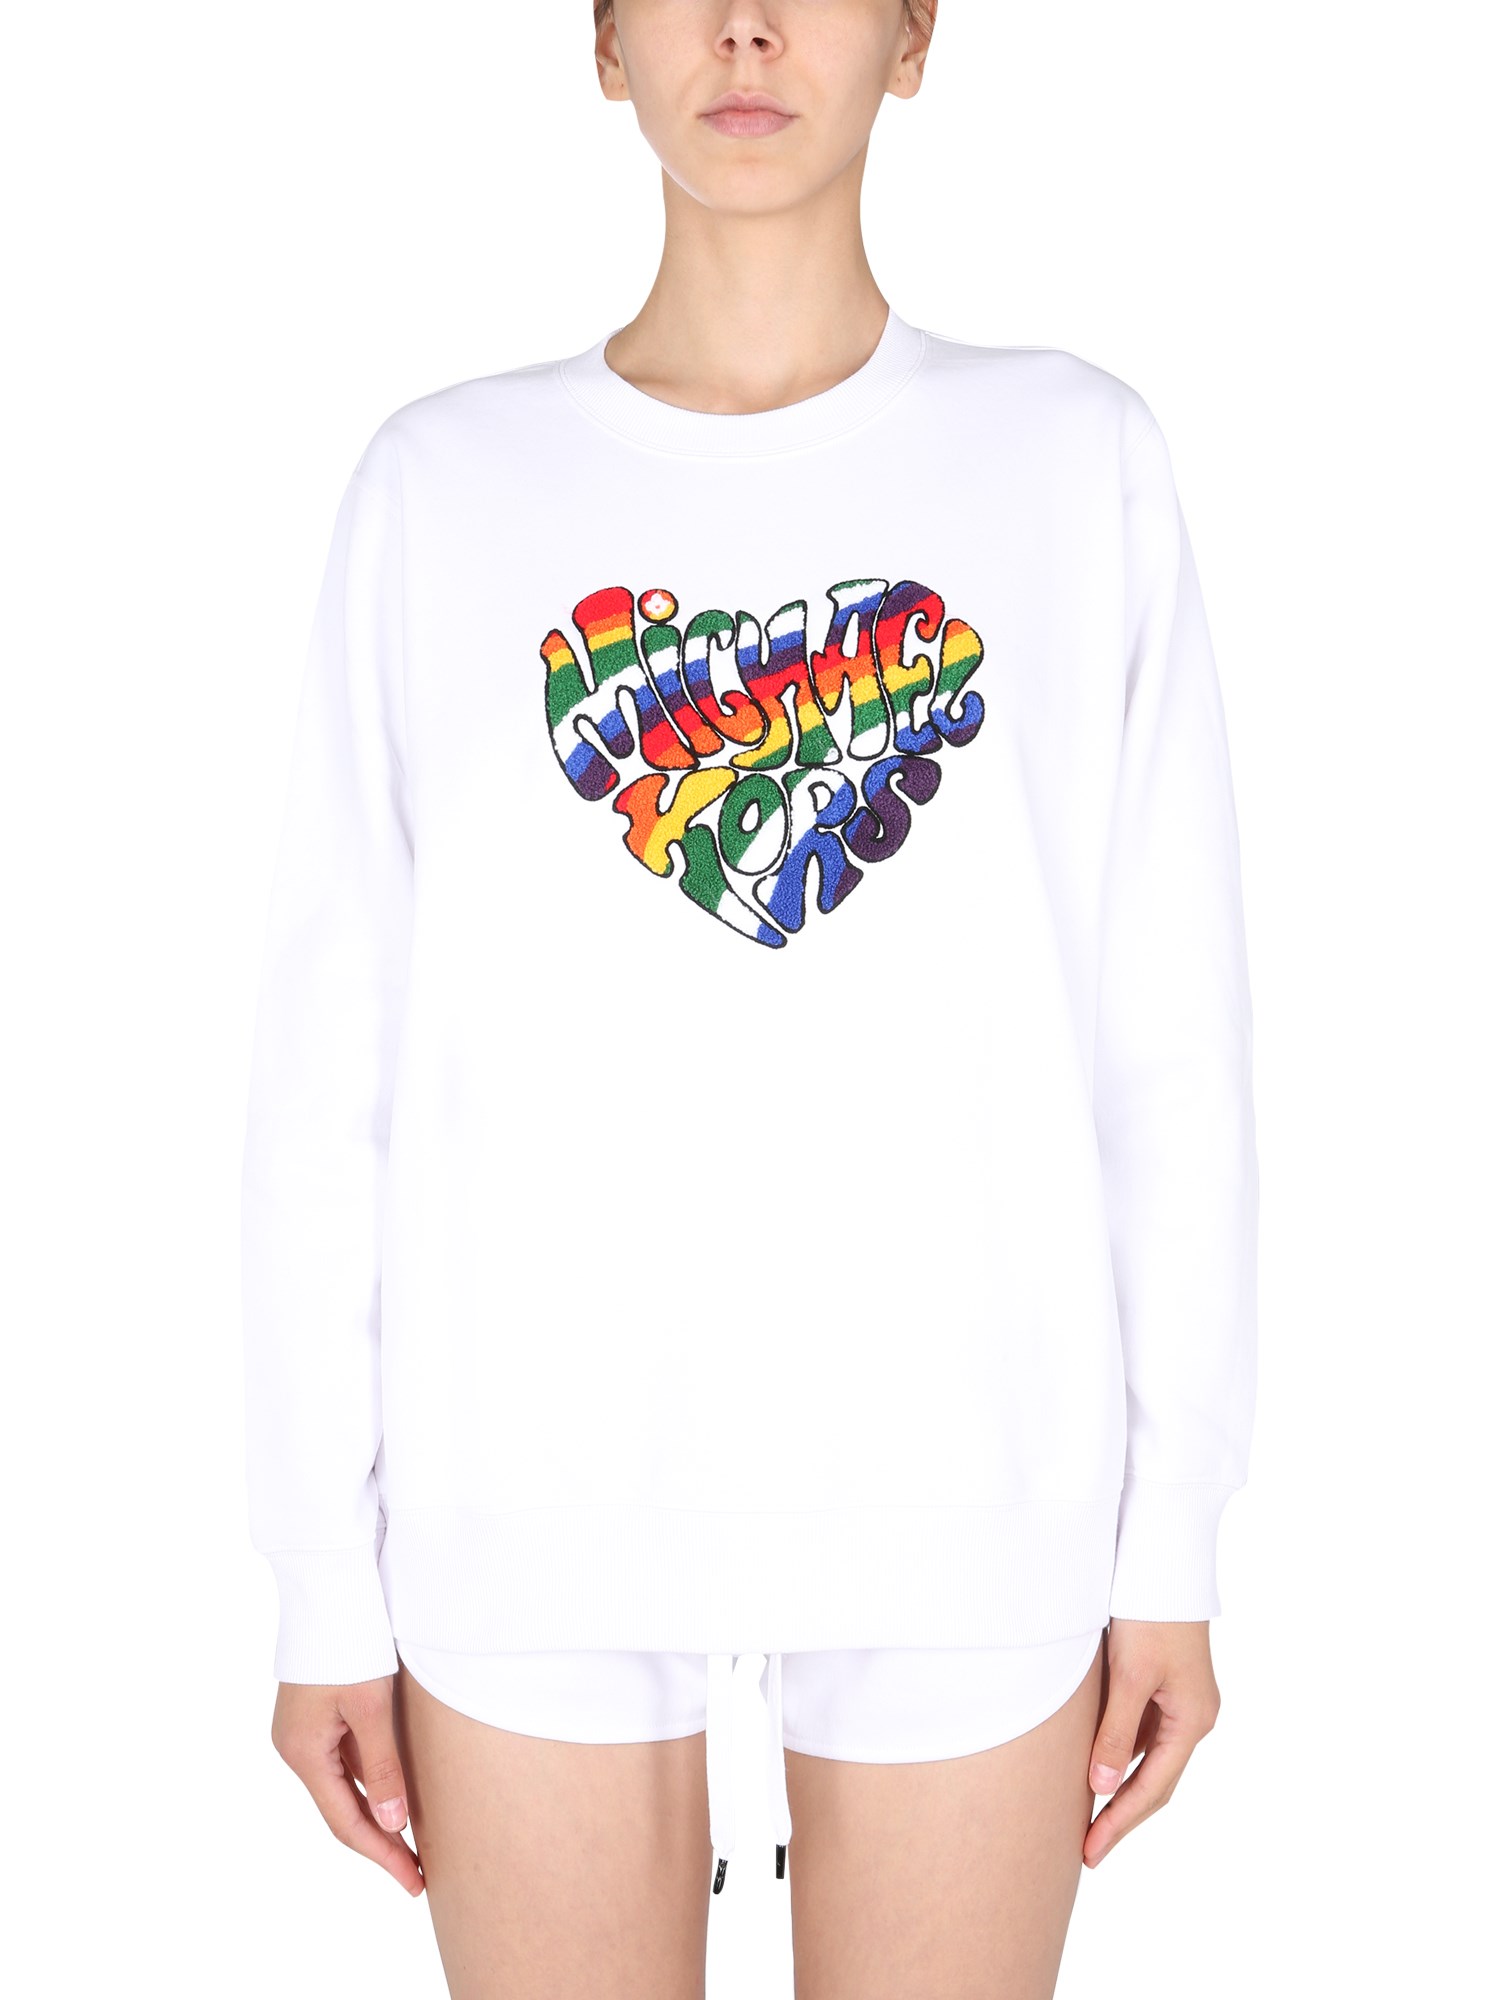 michael by michael kors crew neck sweatshirt with pride heart logo